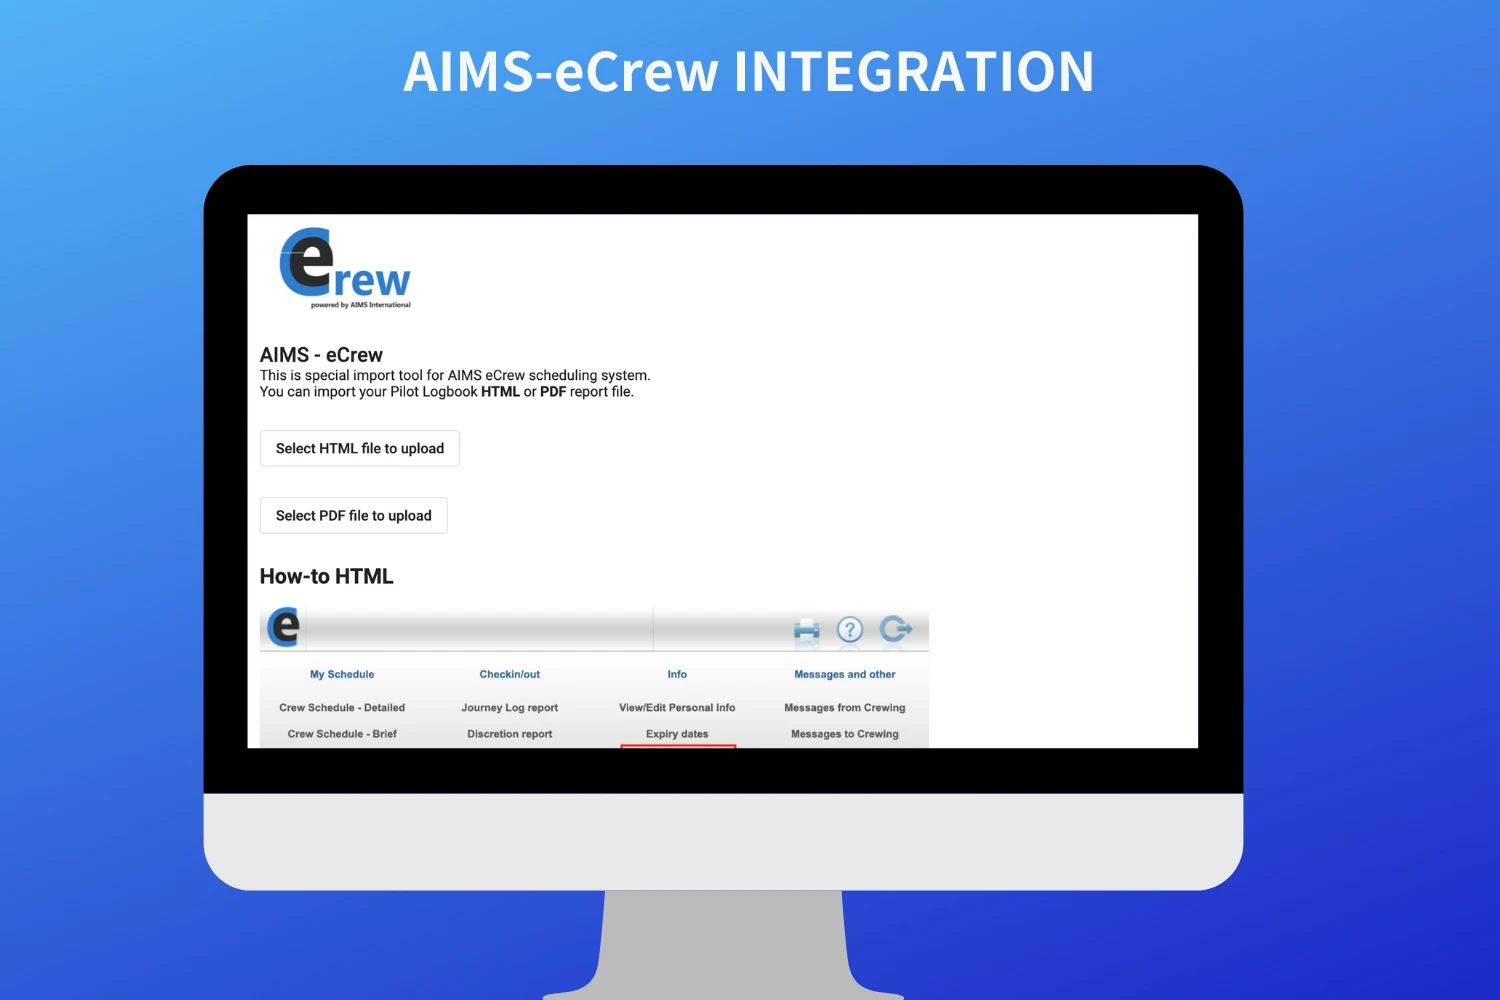 AIMS eCrew intergration